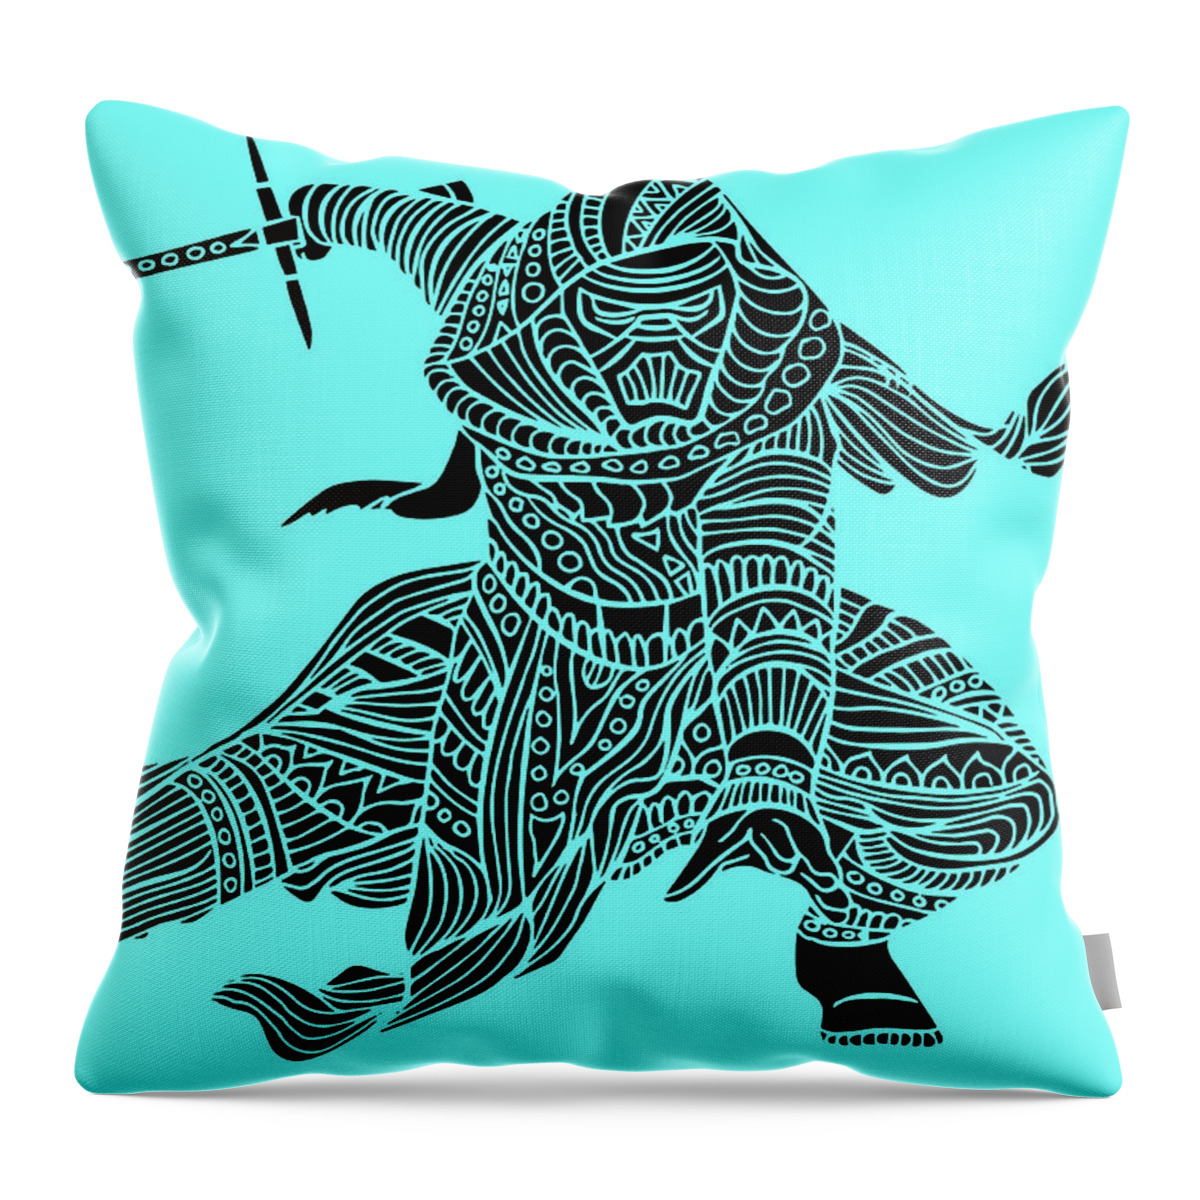 Kylo Ren Throw Pillow featuring the mixed media Kylo Ren - Star Wars Art - Blue by Studio Grafiikka